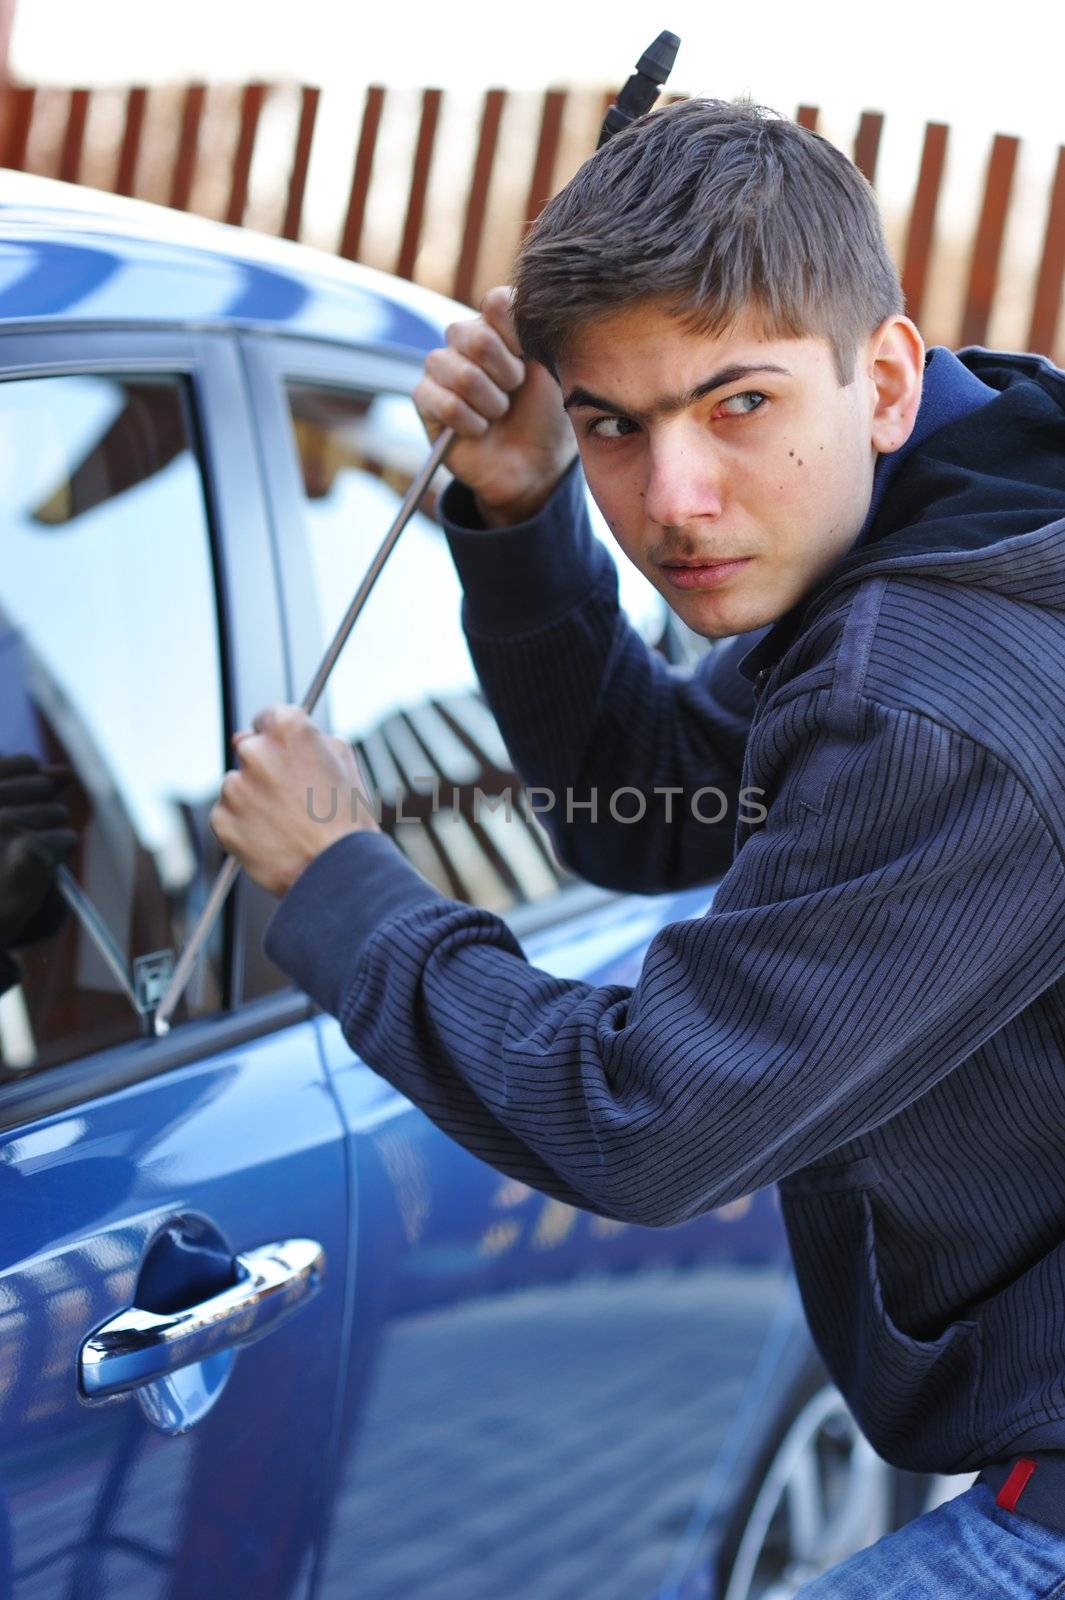 Car thief by haveseen